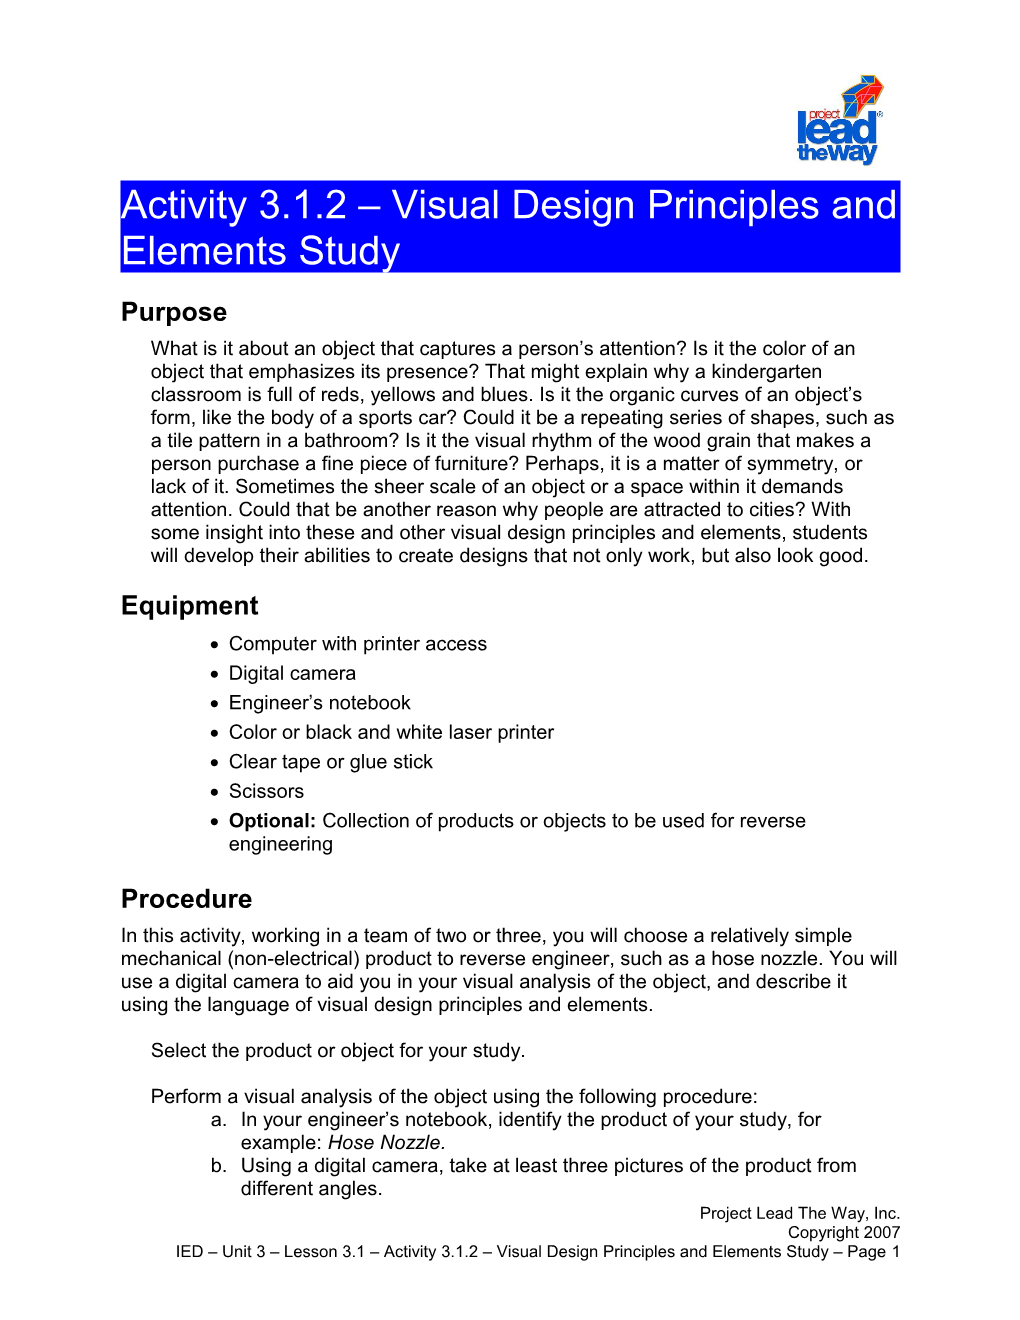 Activity 3.1.2: Visual Design Principles and Elements Study